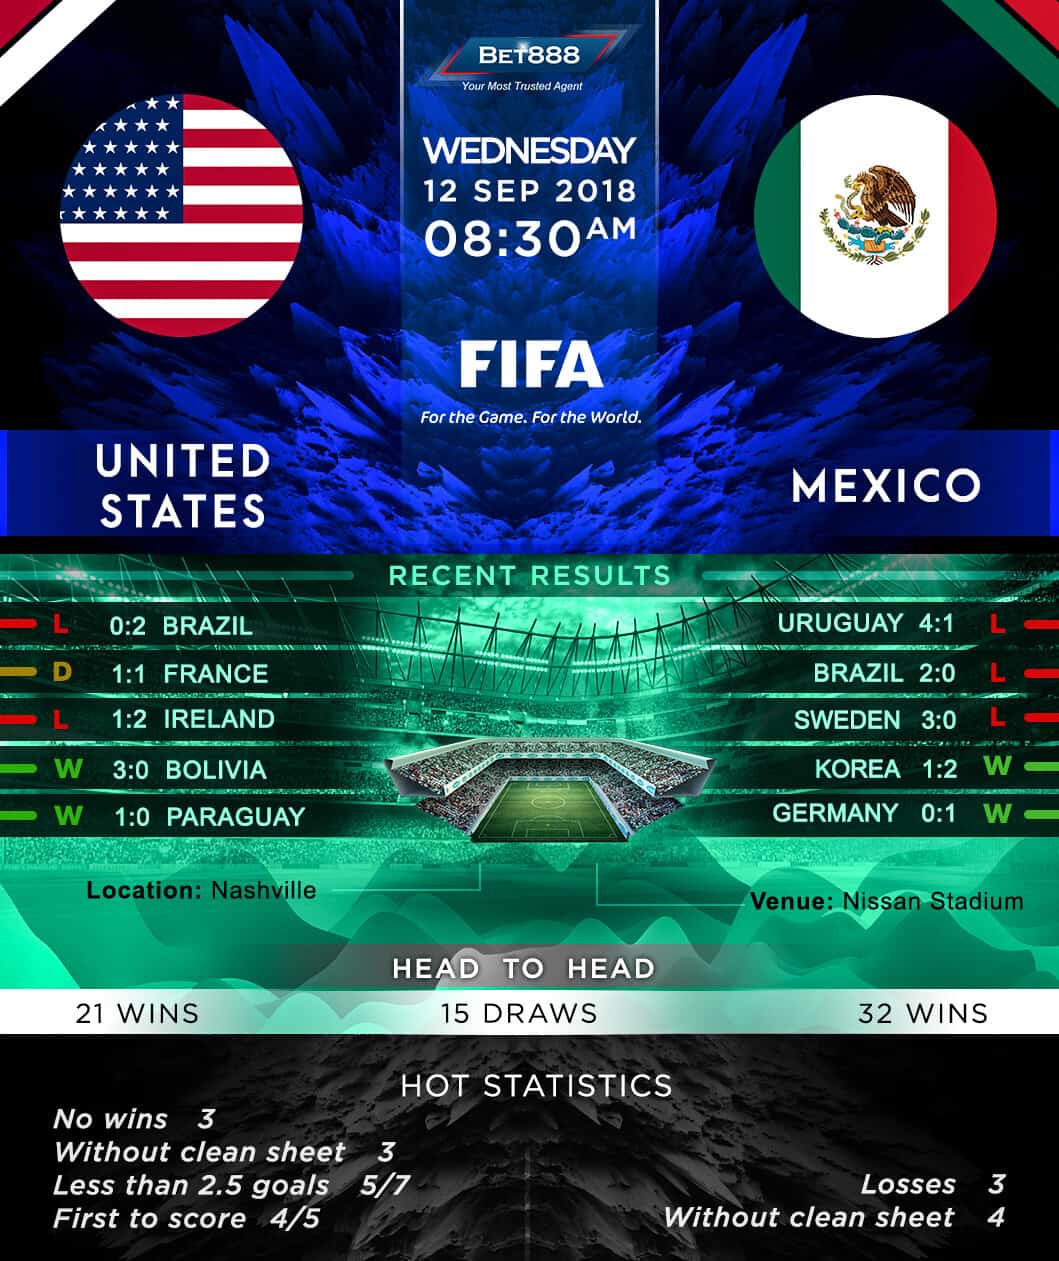 United States vs Mexico 12/09/18